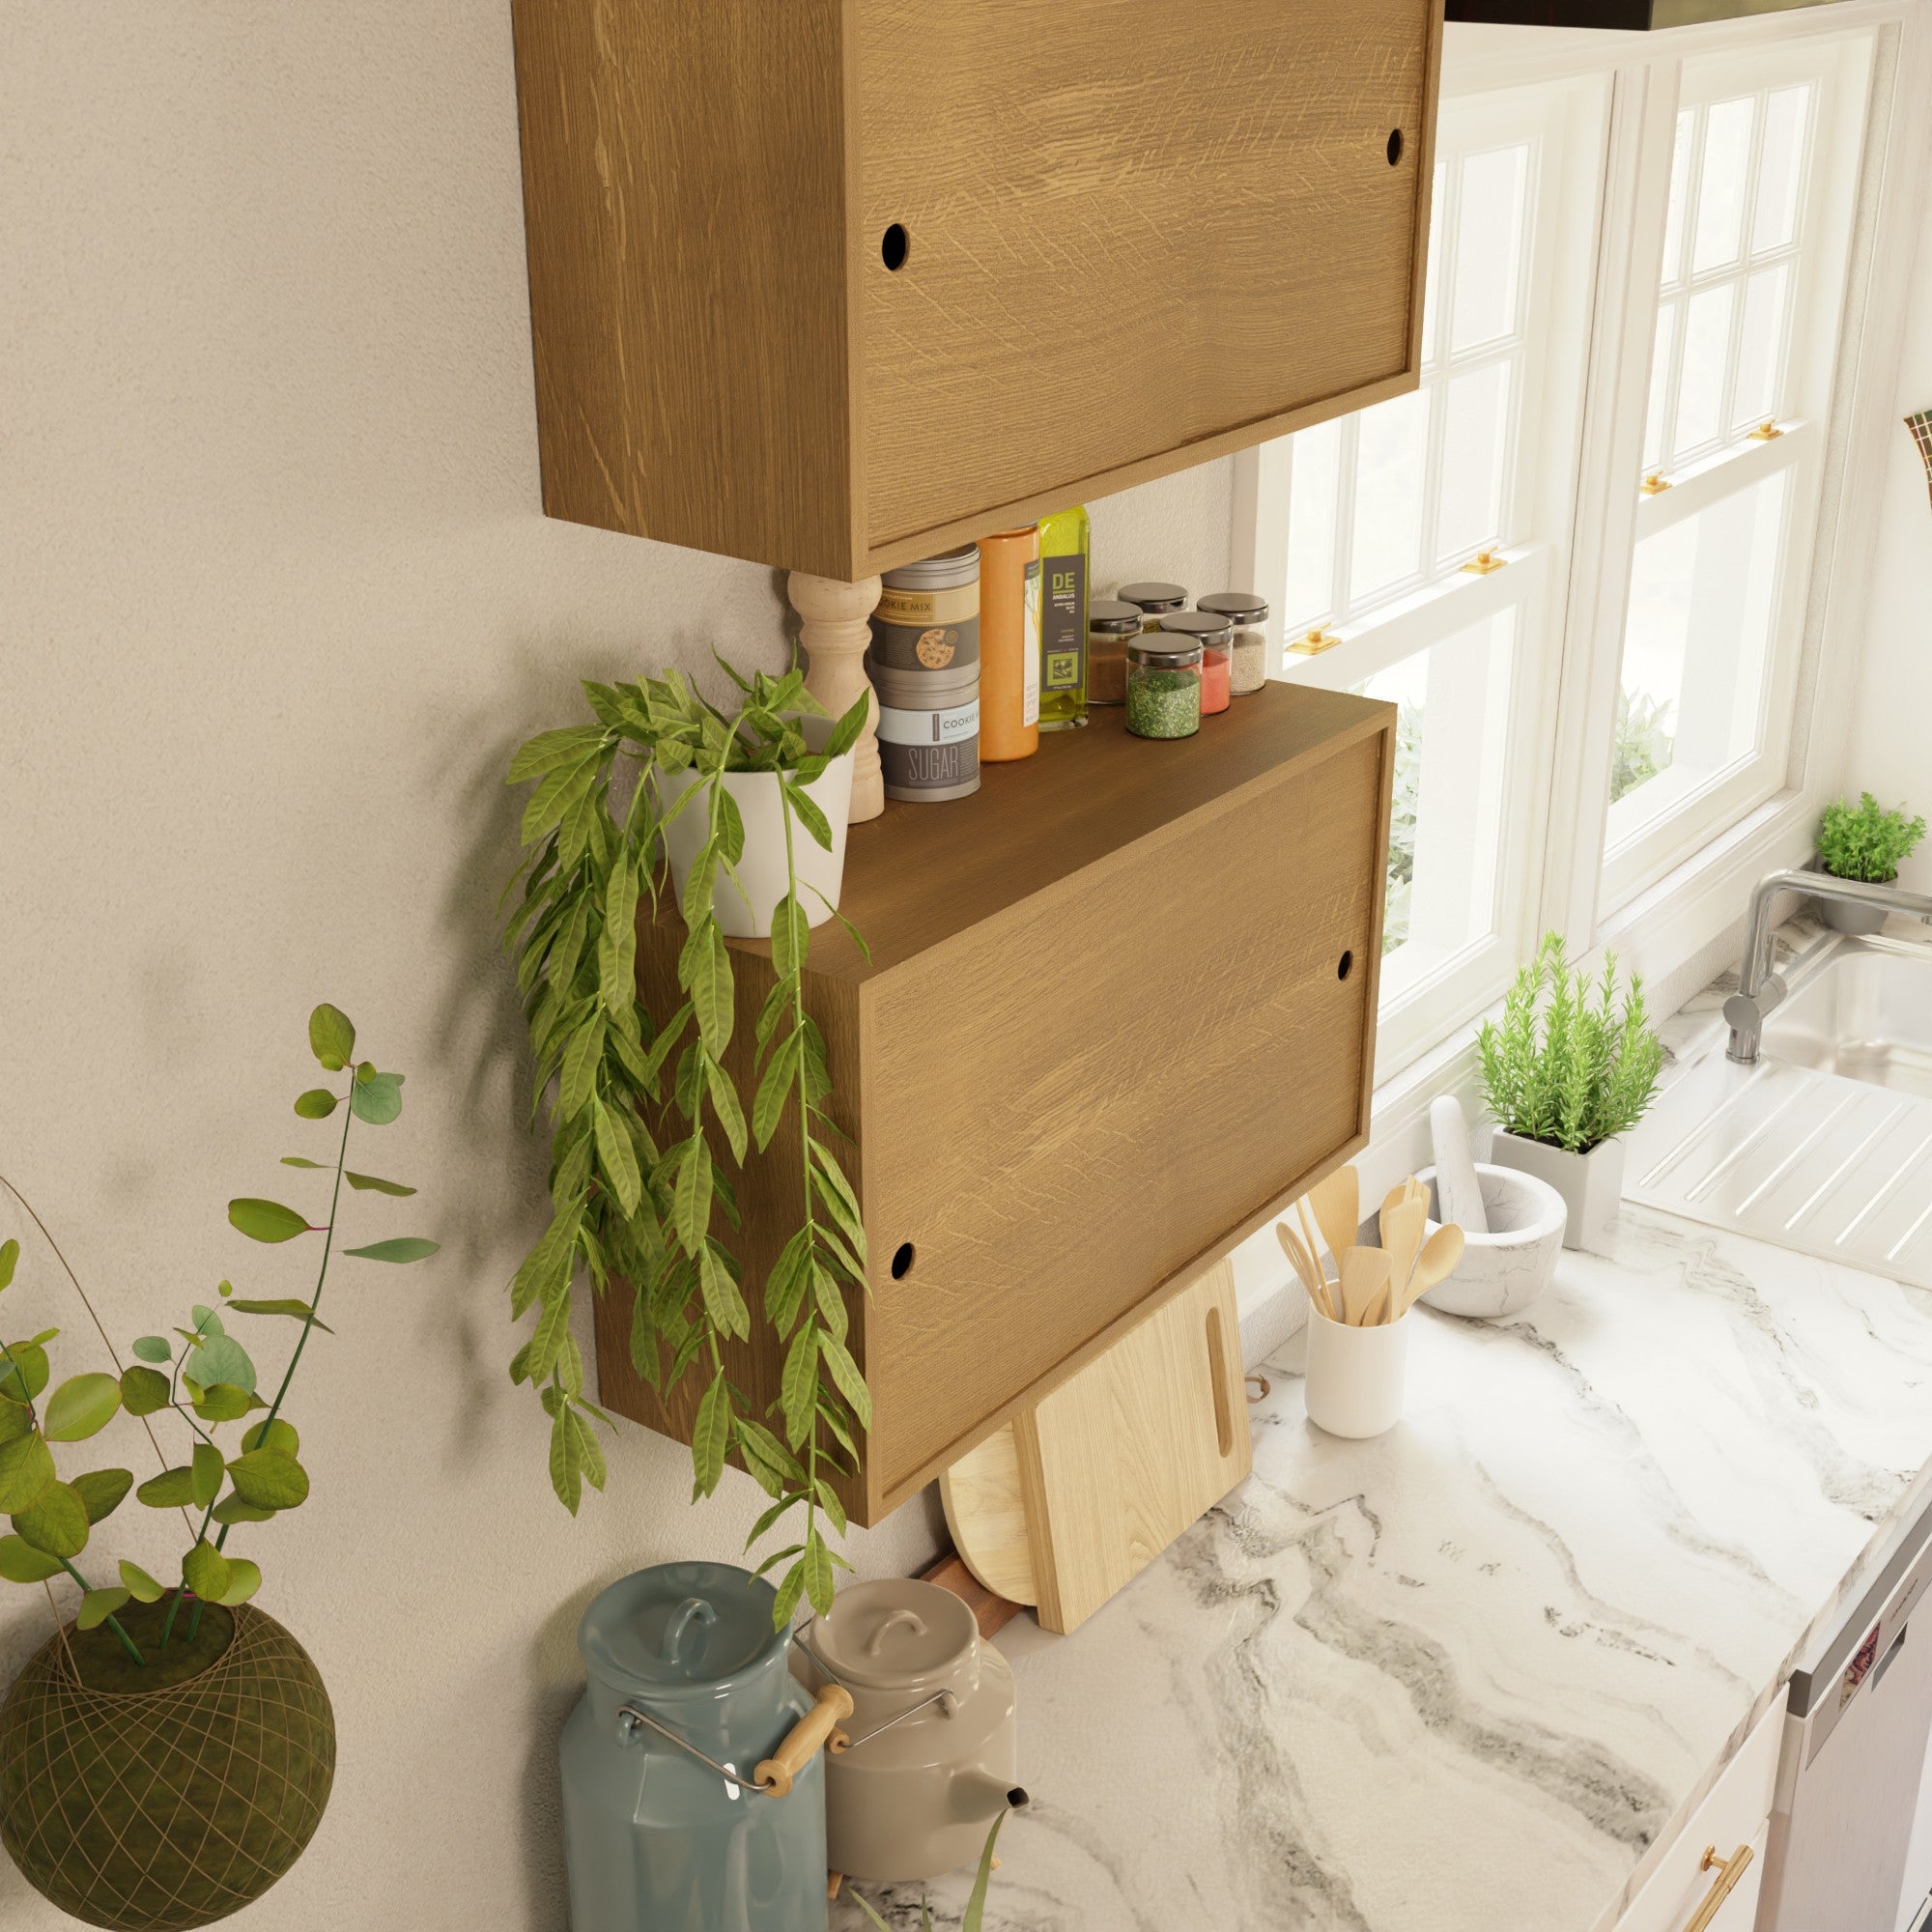 White Oak Cupboard with Shelf and Sliding Doors - Krøvel Furniture Co. Handmade in Maine